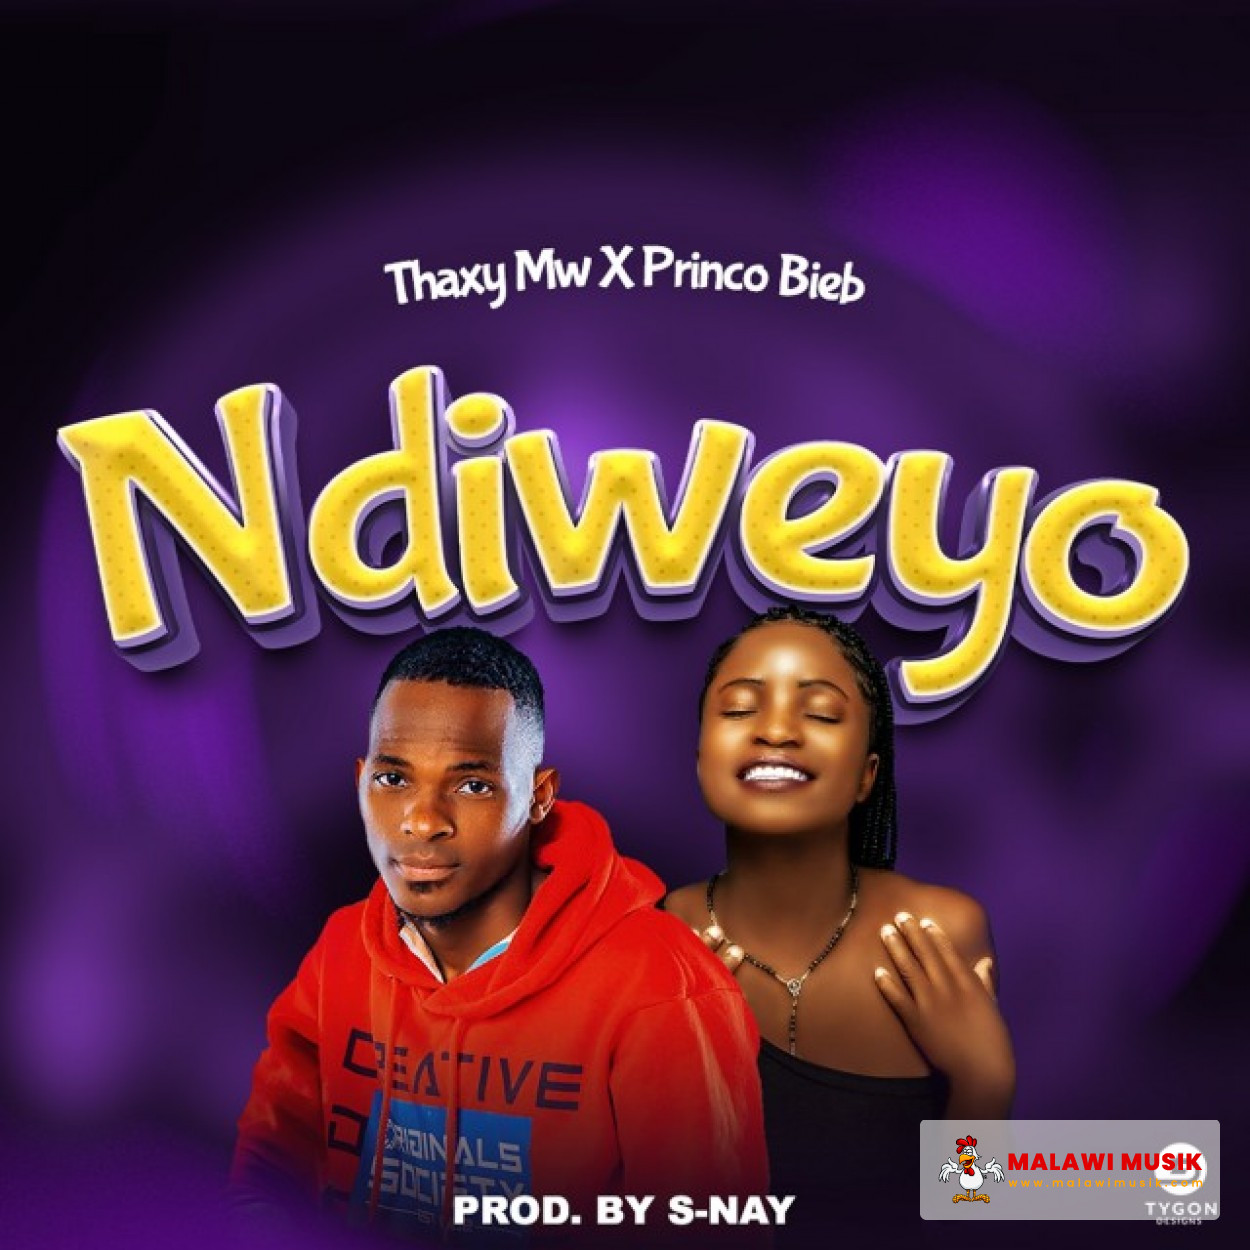 Thaxy Mw-Thaxy Mw - Ndiweyo (Thaxy Mw & Princo Beib) Prod. S Nay-song artwork cover